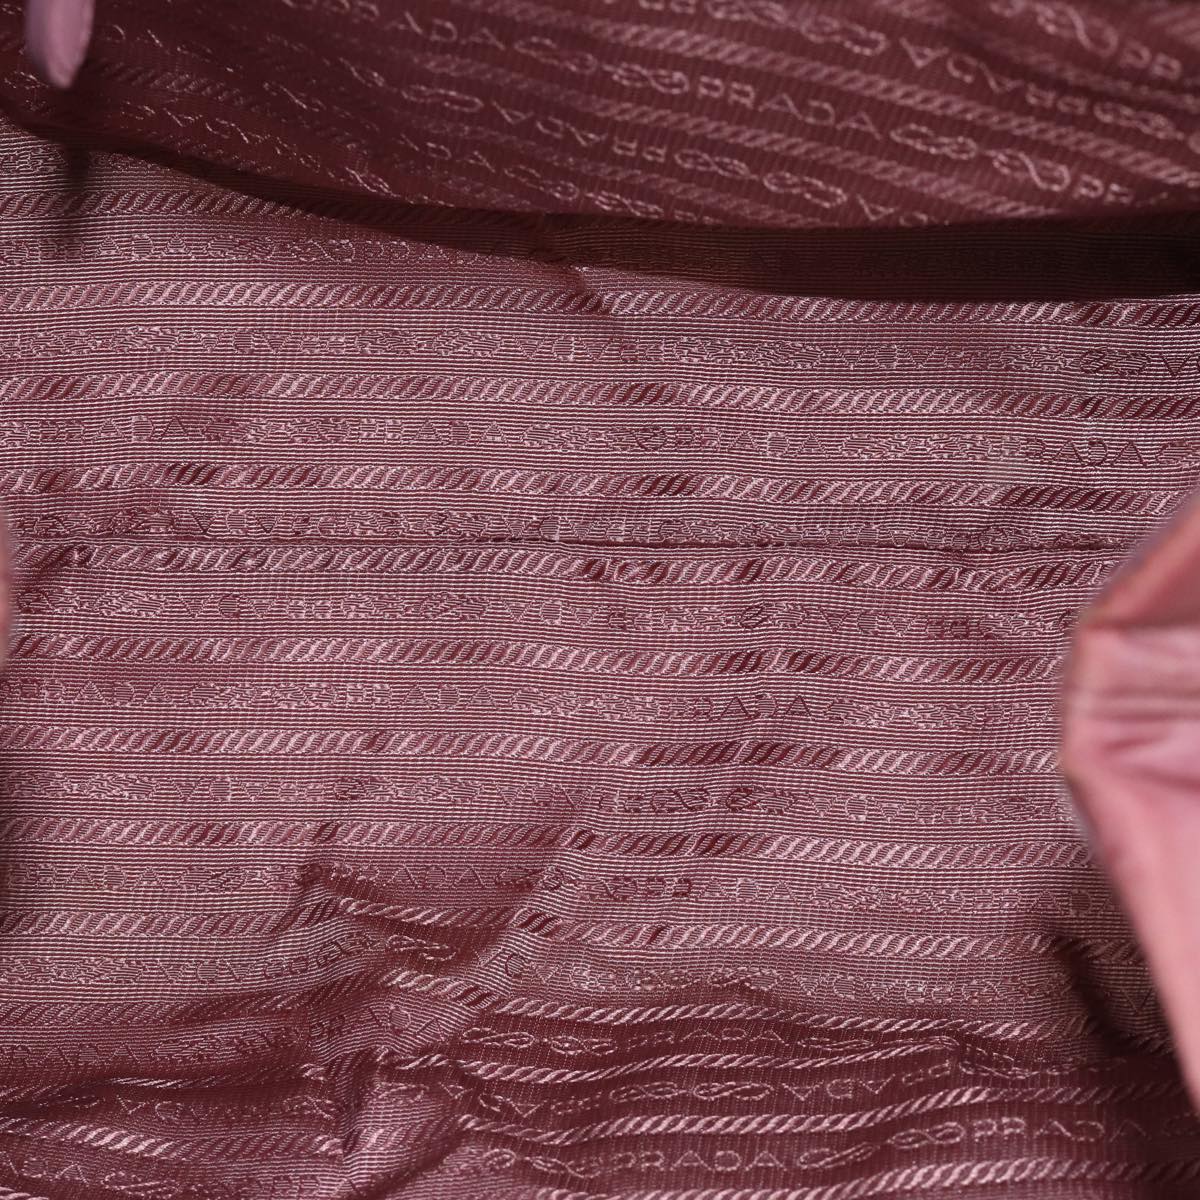 PRADA Hand Bag Nylon Pink Auth bs13566